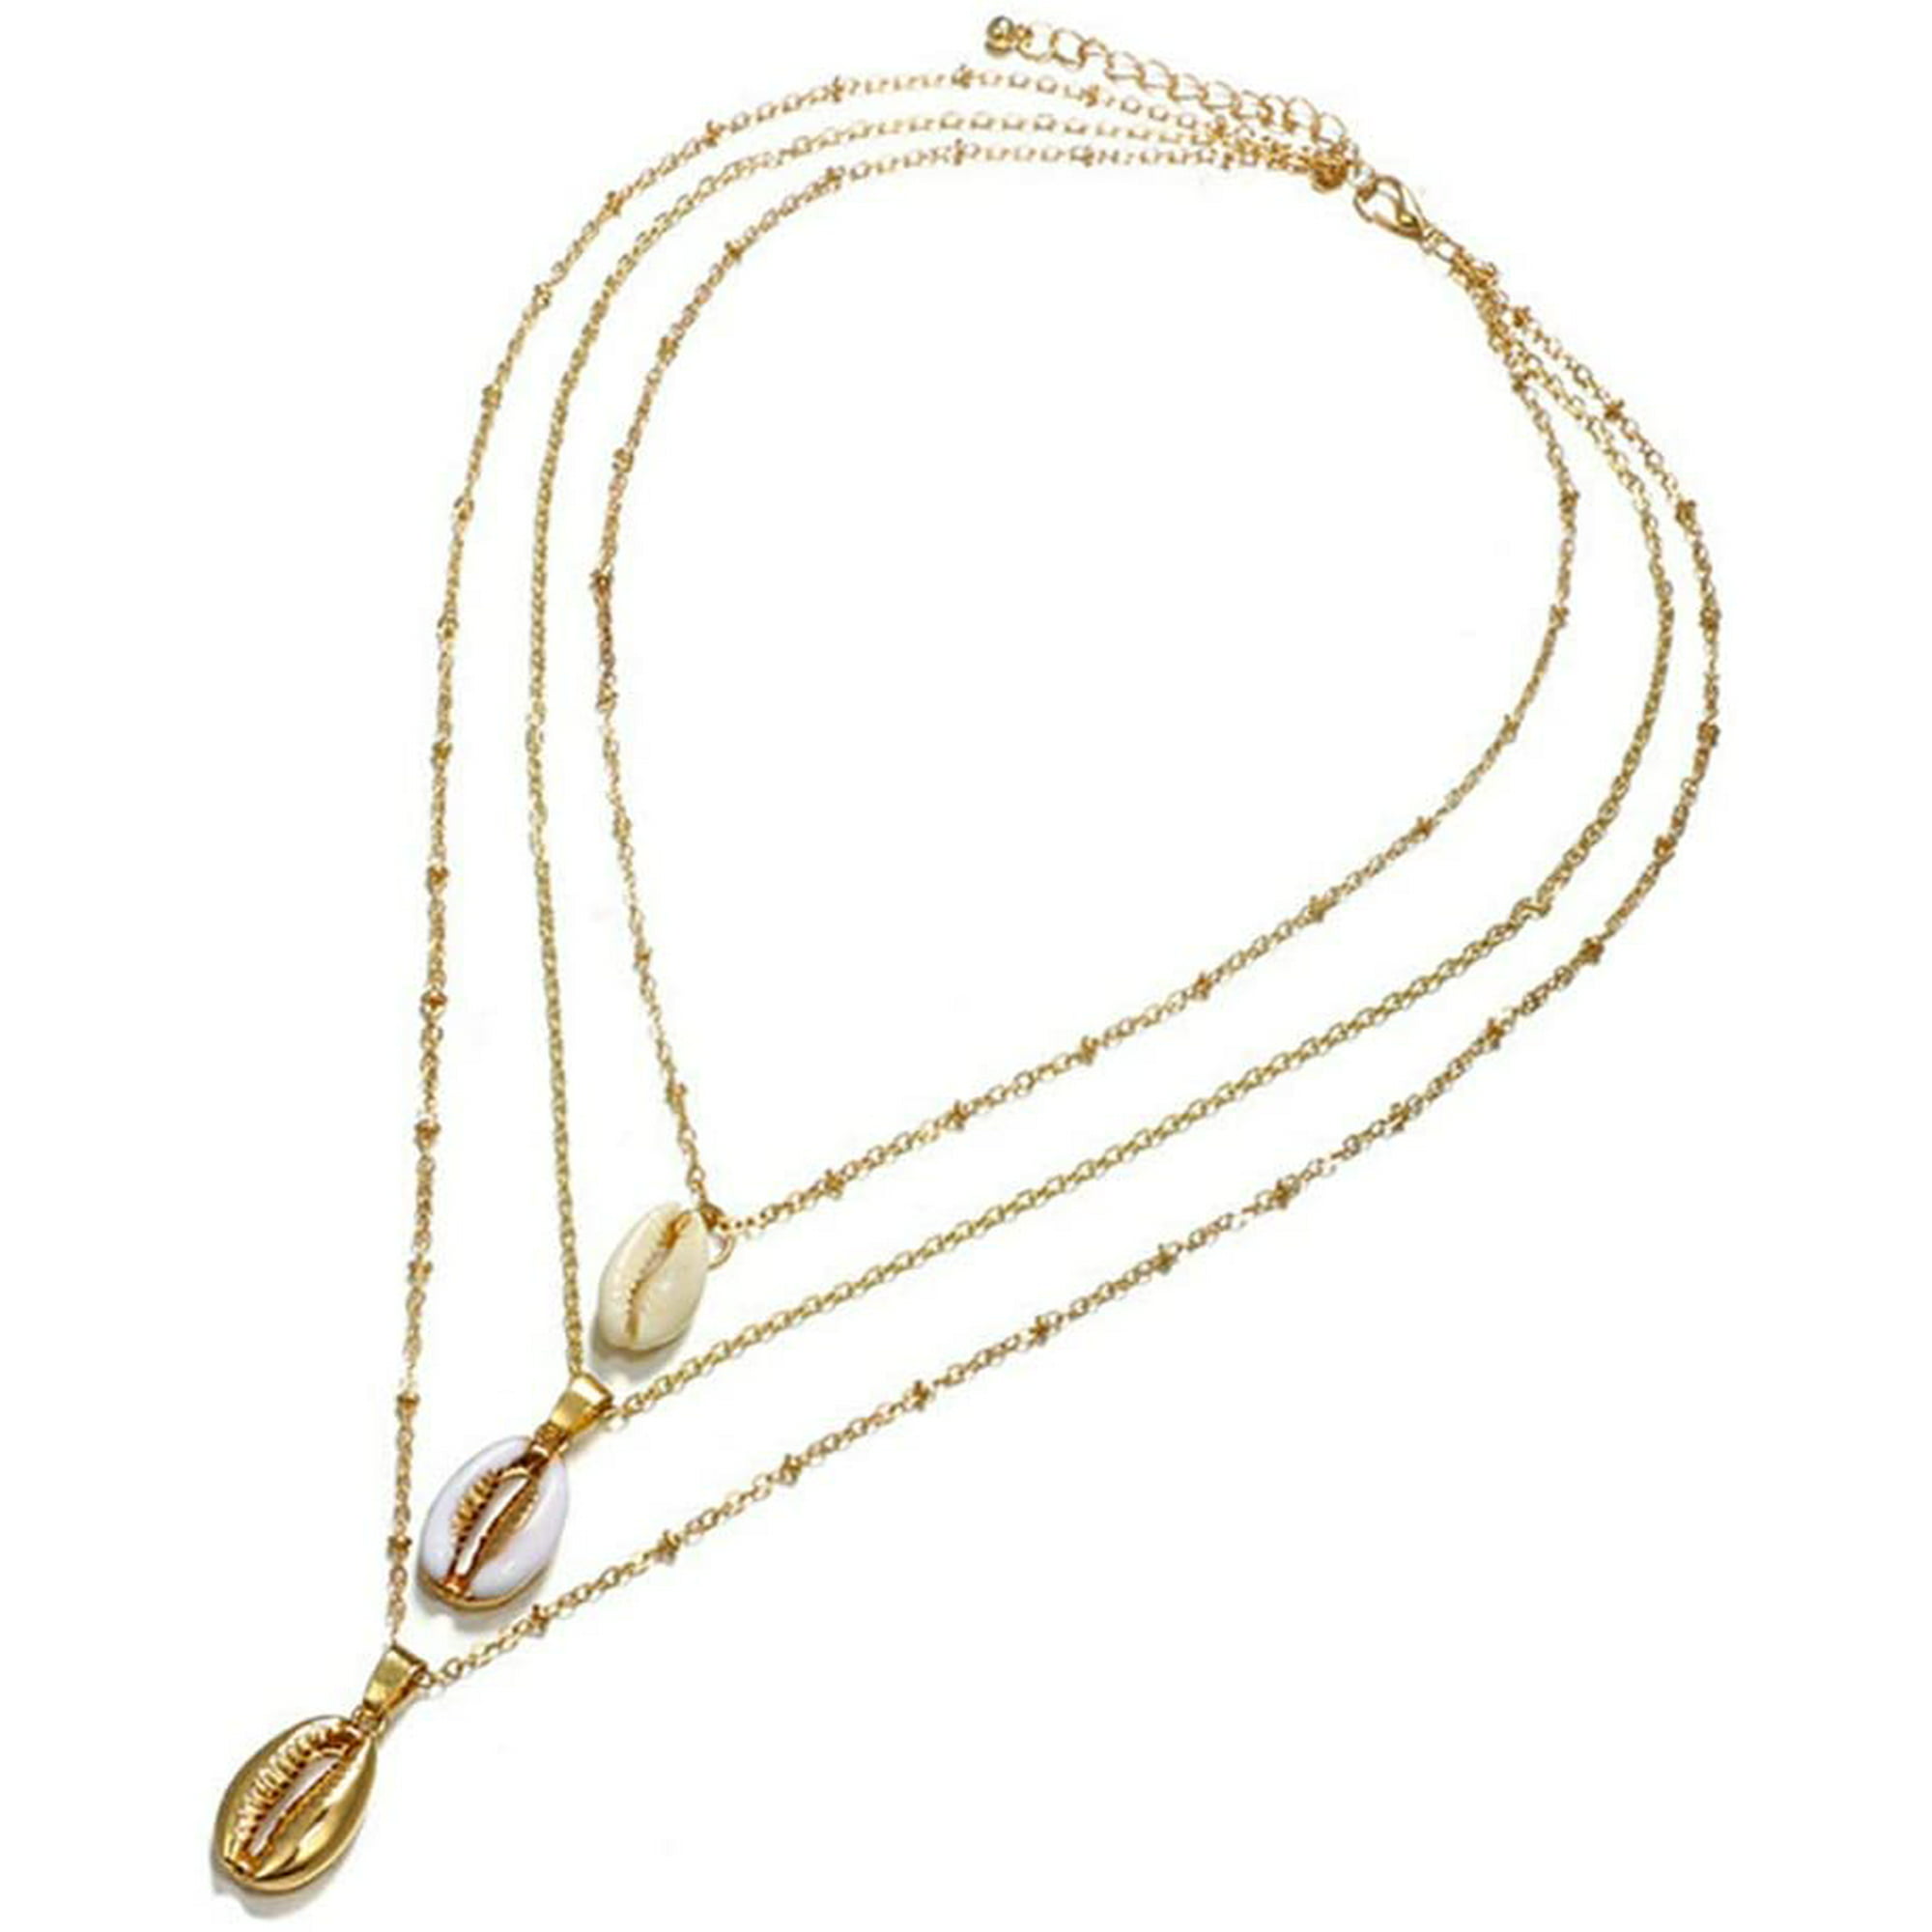 Golden Key Black Crystal CZ Gold Filled Pendant Women Lady Party Necklace Choker